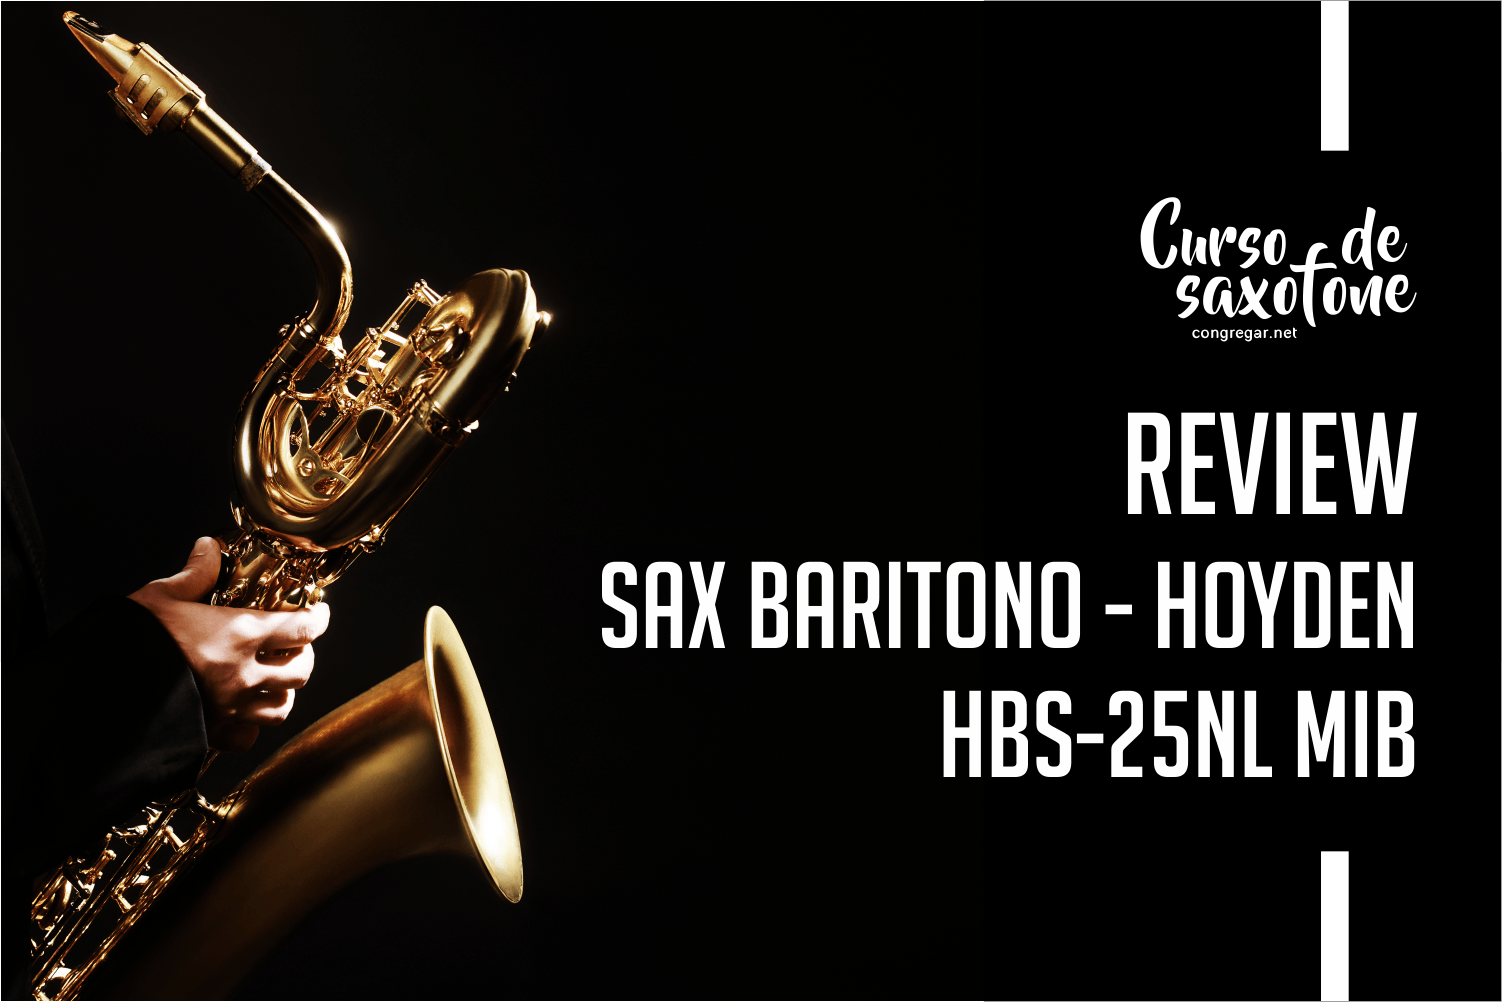 Sax Baritono - Hoyden - HBS 25NL - Review